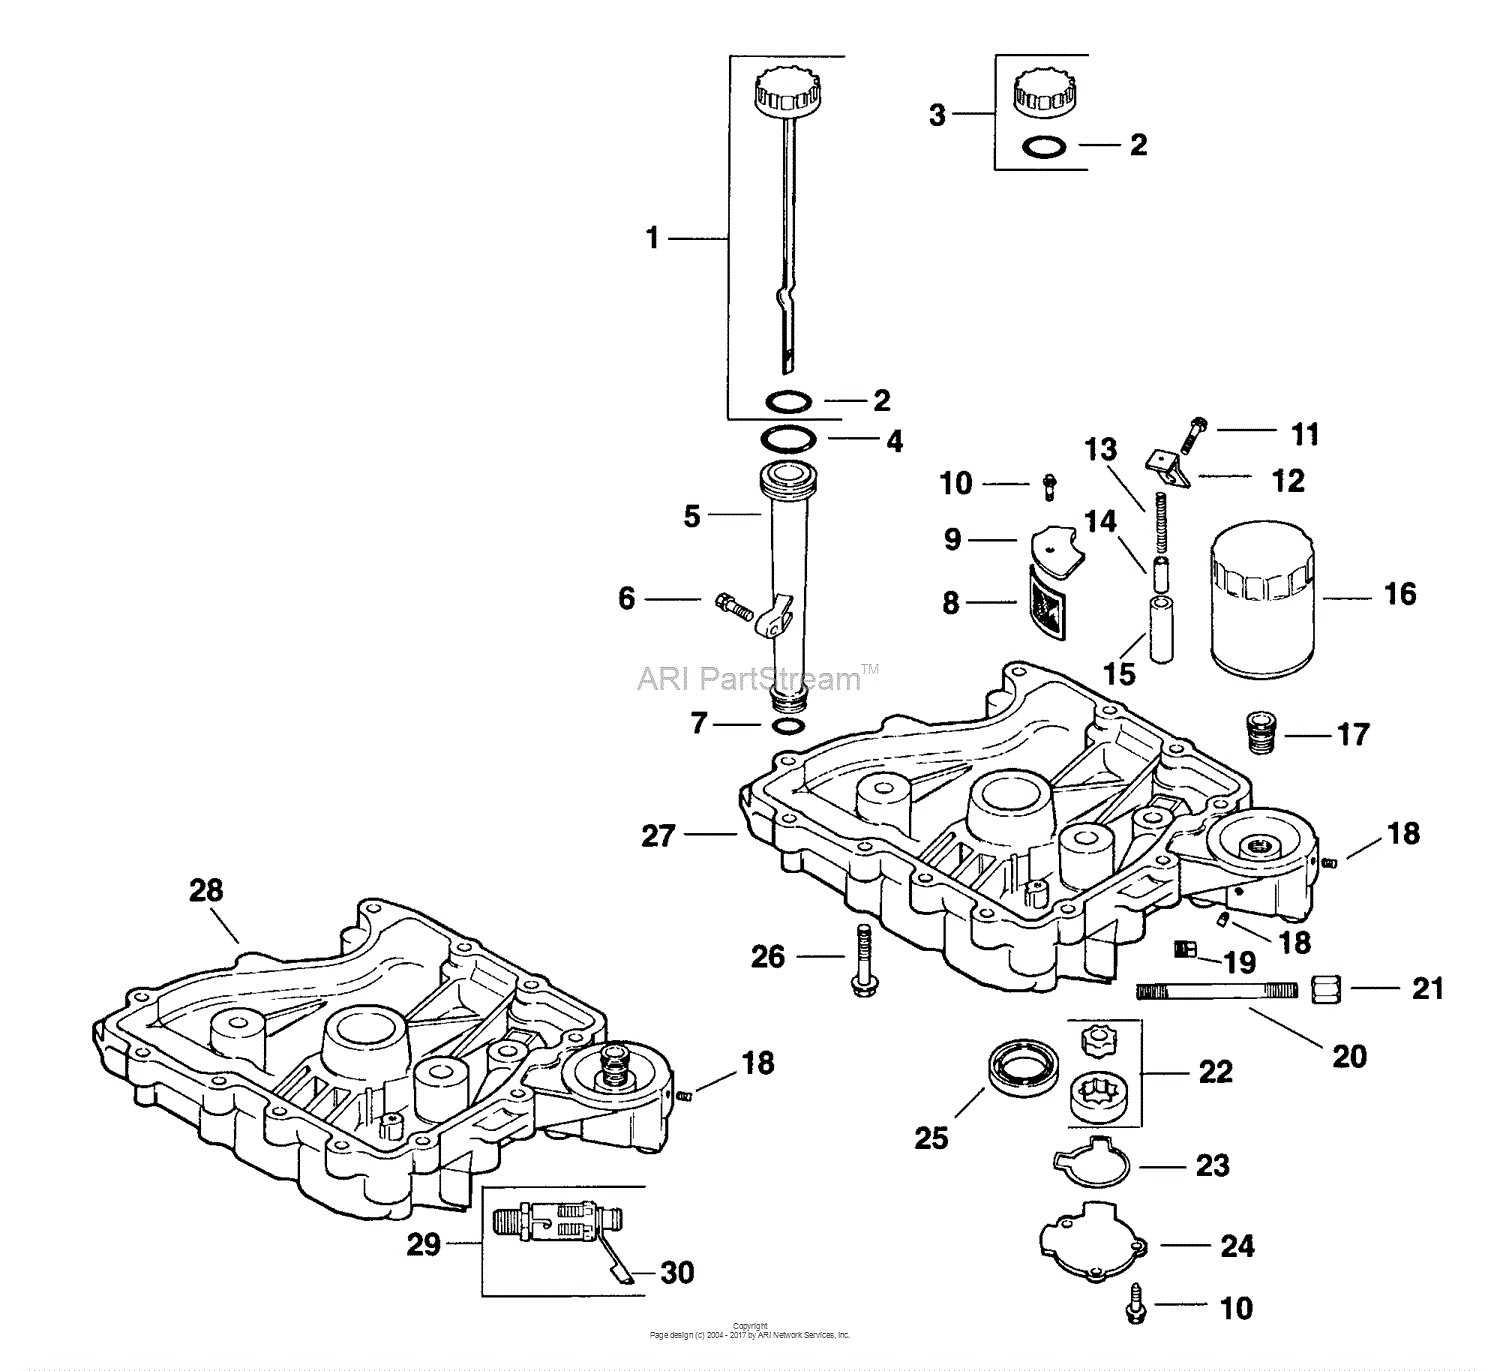 Honda 6 5 Hp Engine Parts Diagram Kohler Cv14 1445 American Yard Products 14 Hp Parts Diagram for Oil Of Honda 6 5 Hp Engine Parts Diagram